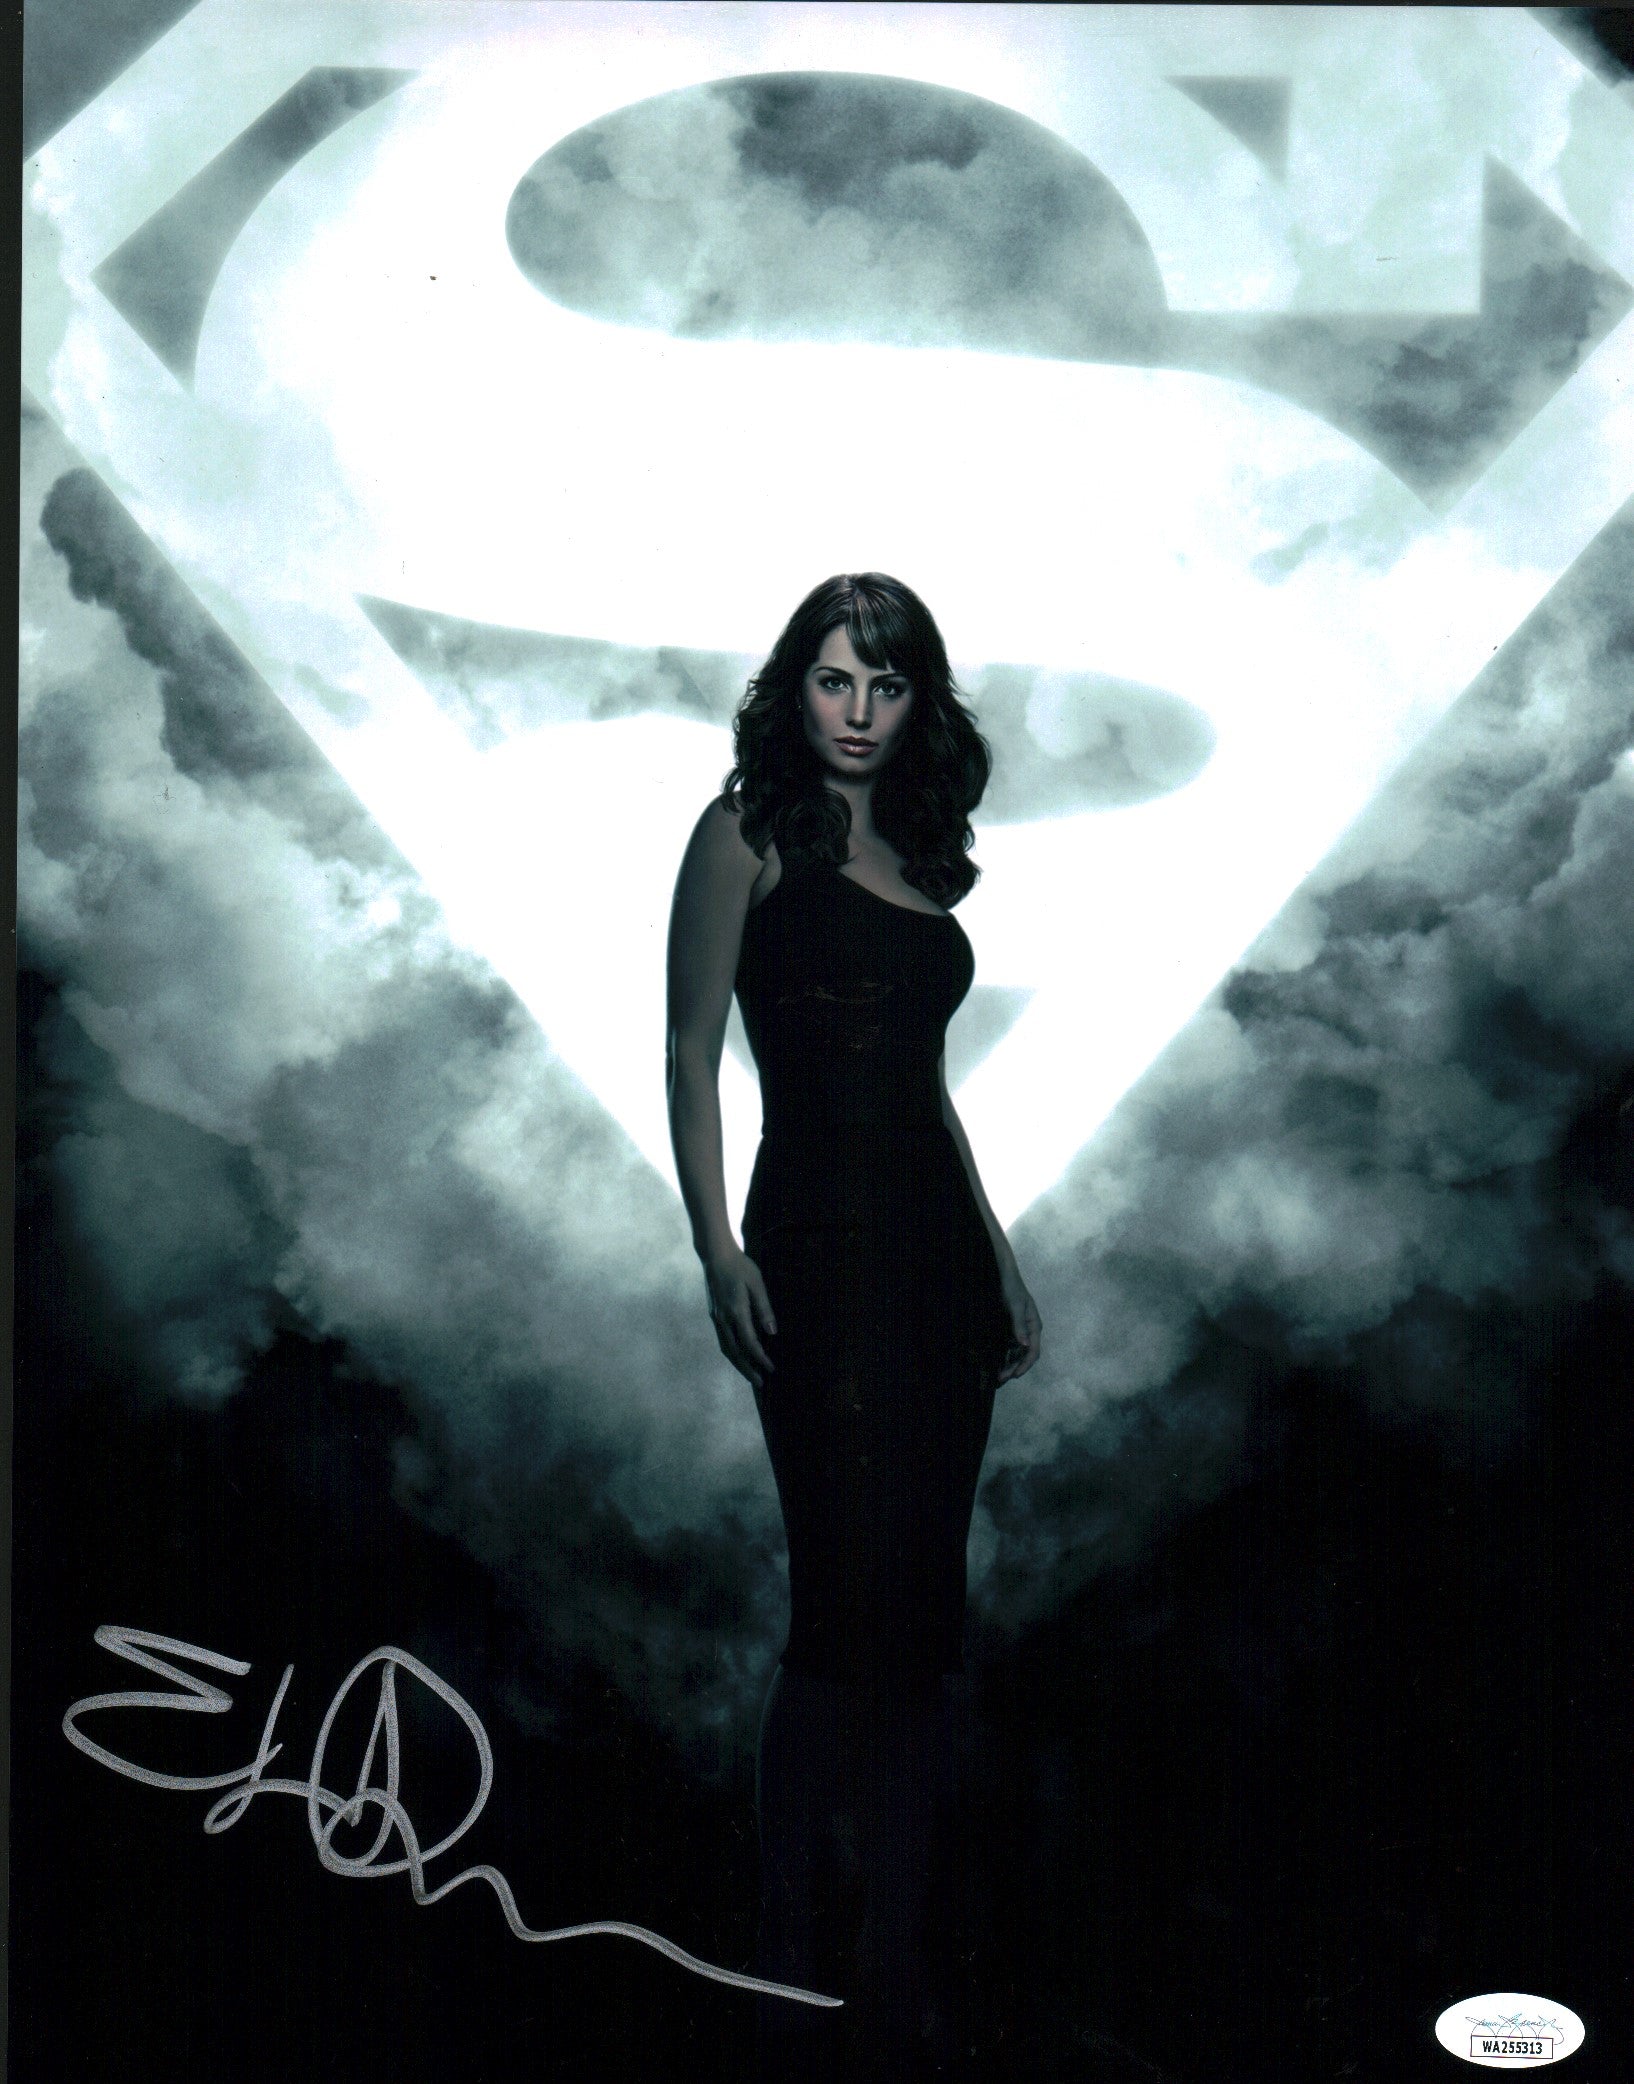 Erica Durance Smallville 11x17 Photo Poster Signed Autograph JSA Certified COA Auto